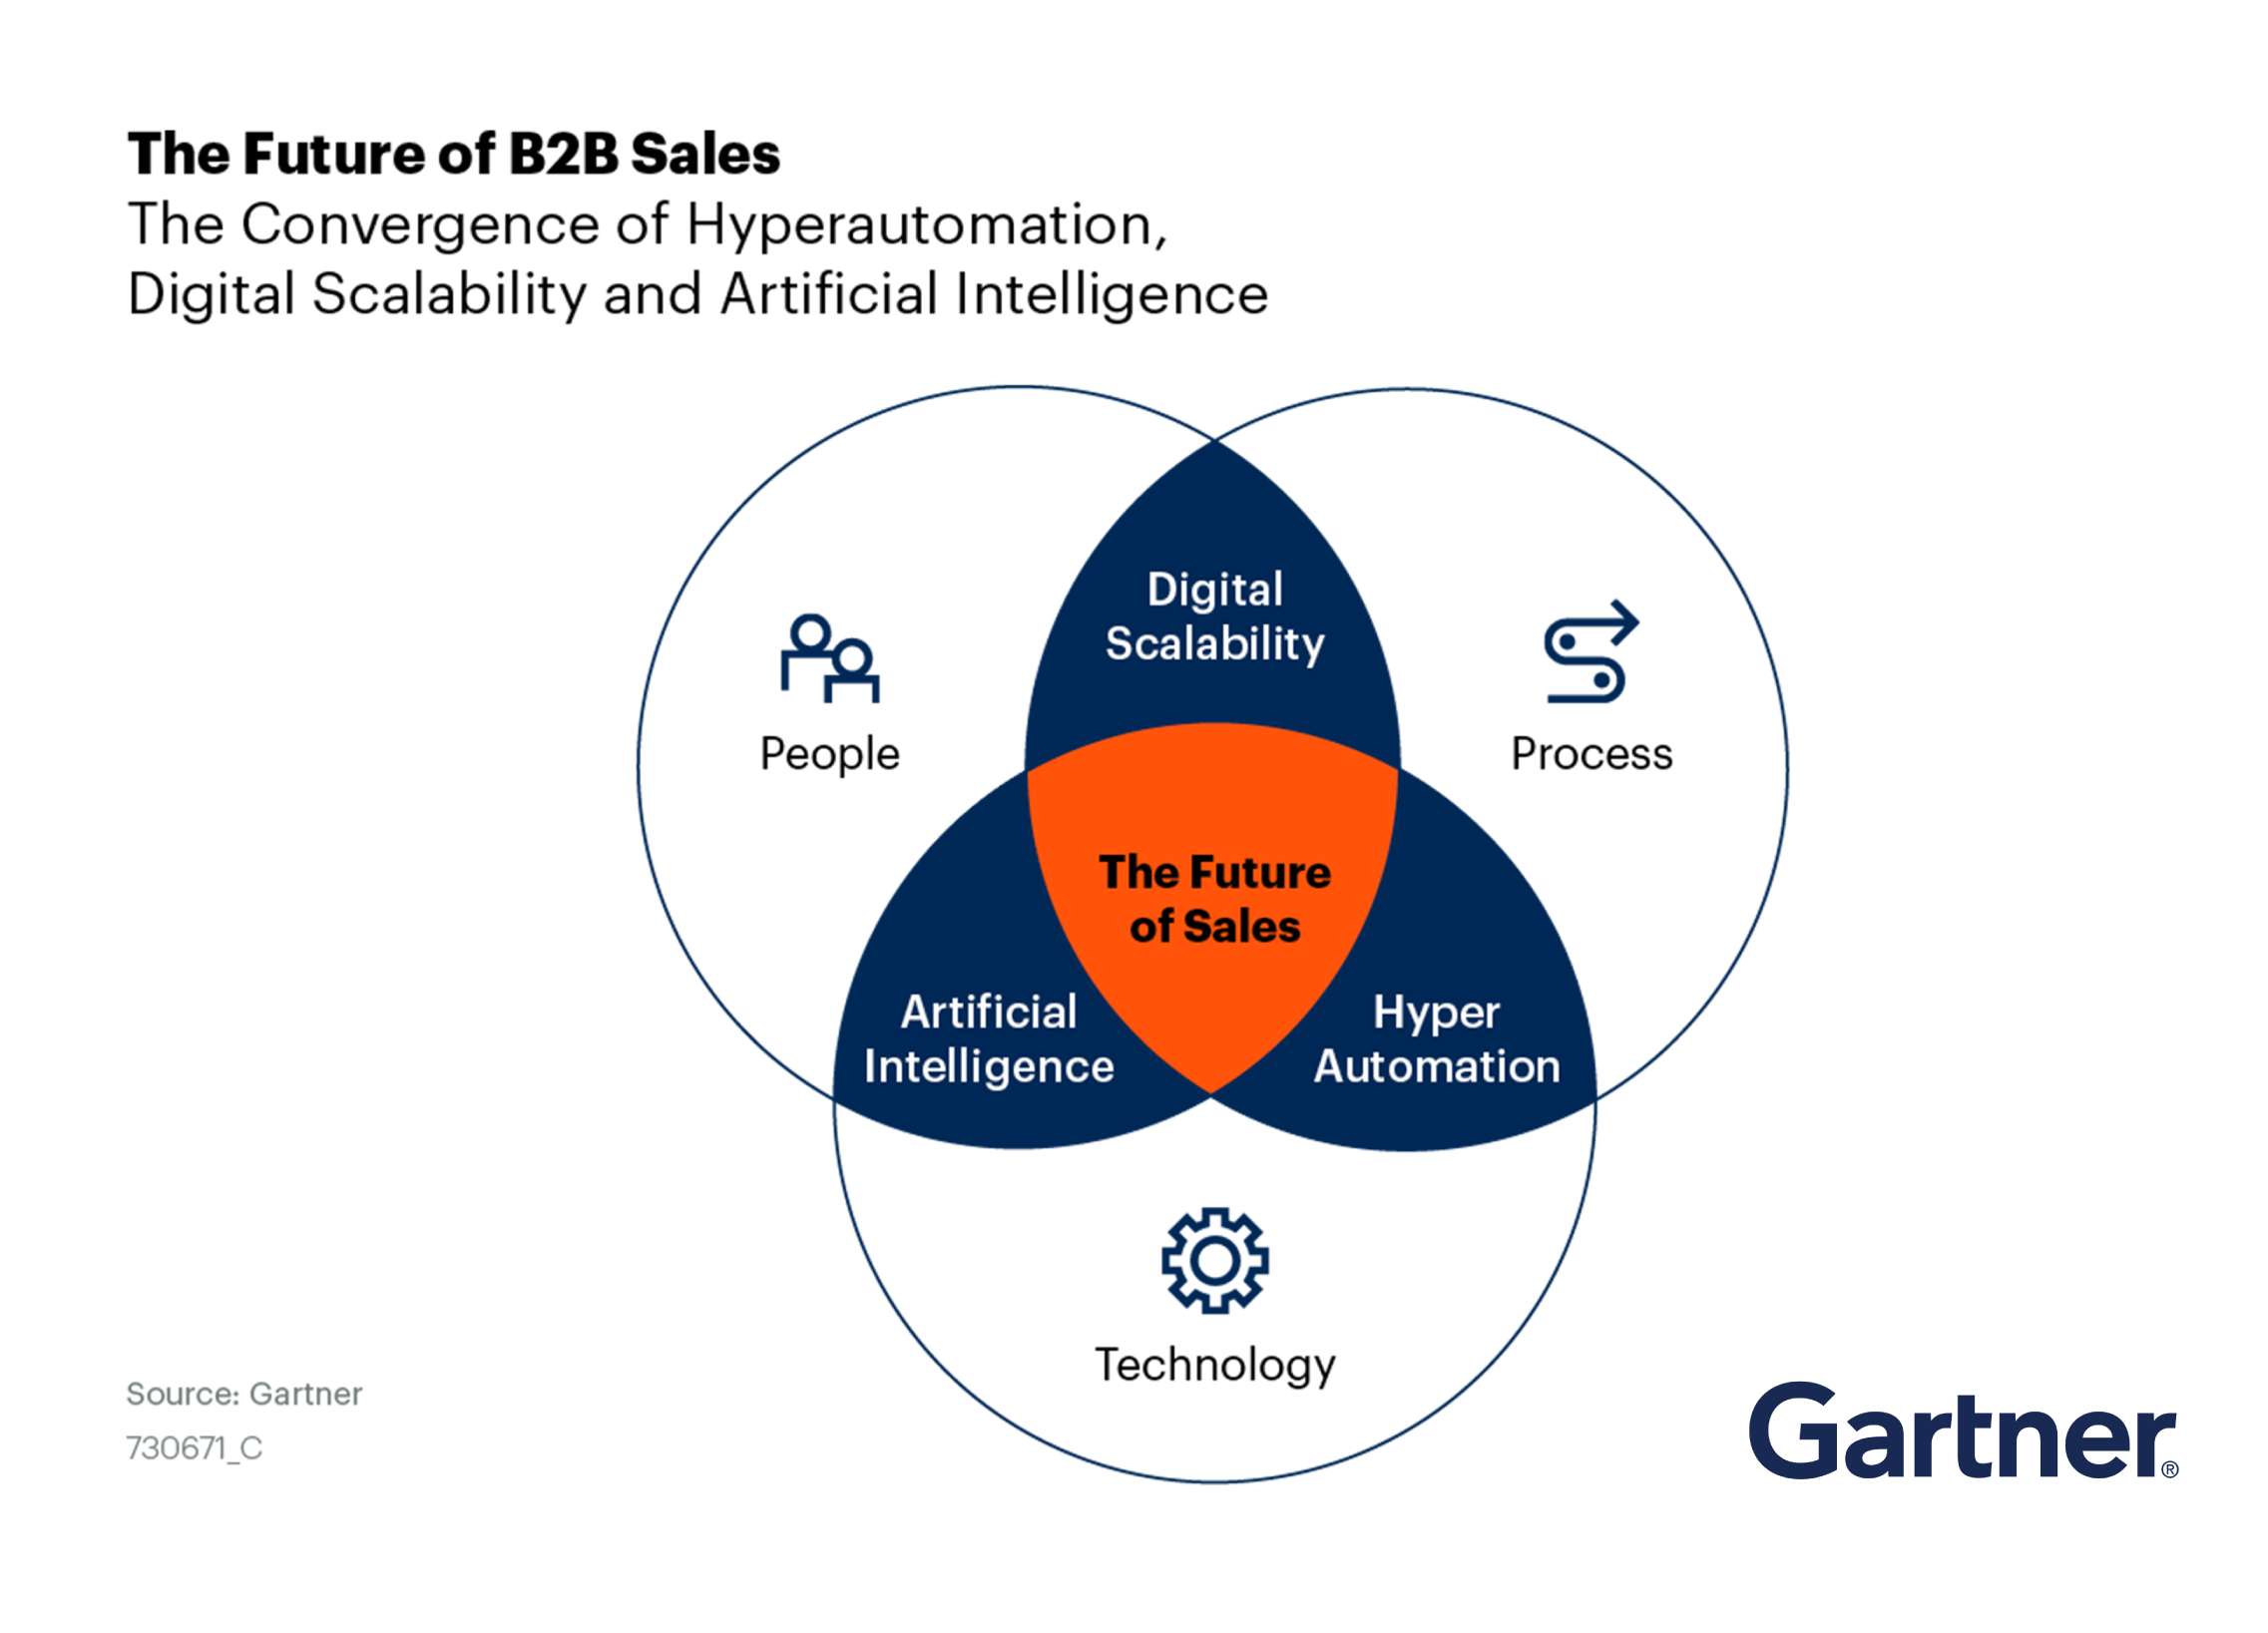 The Future of B2B Sales Gartner Trend Insight Report